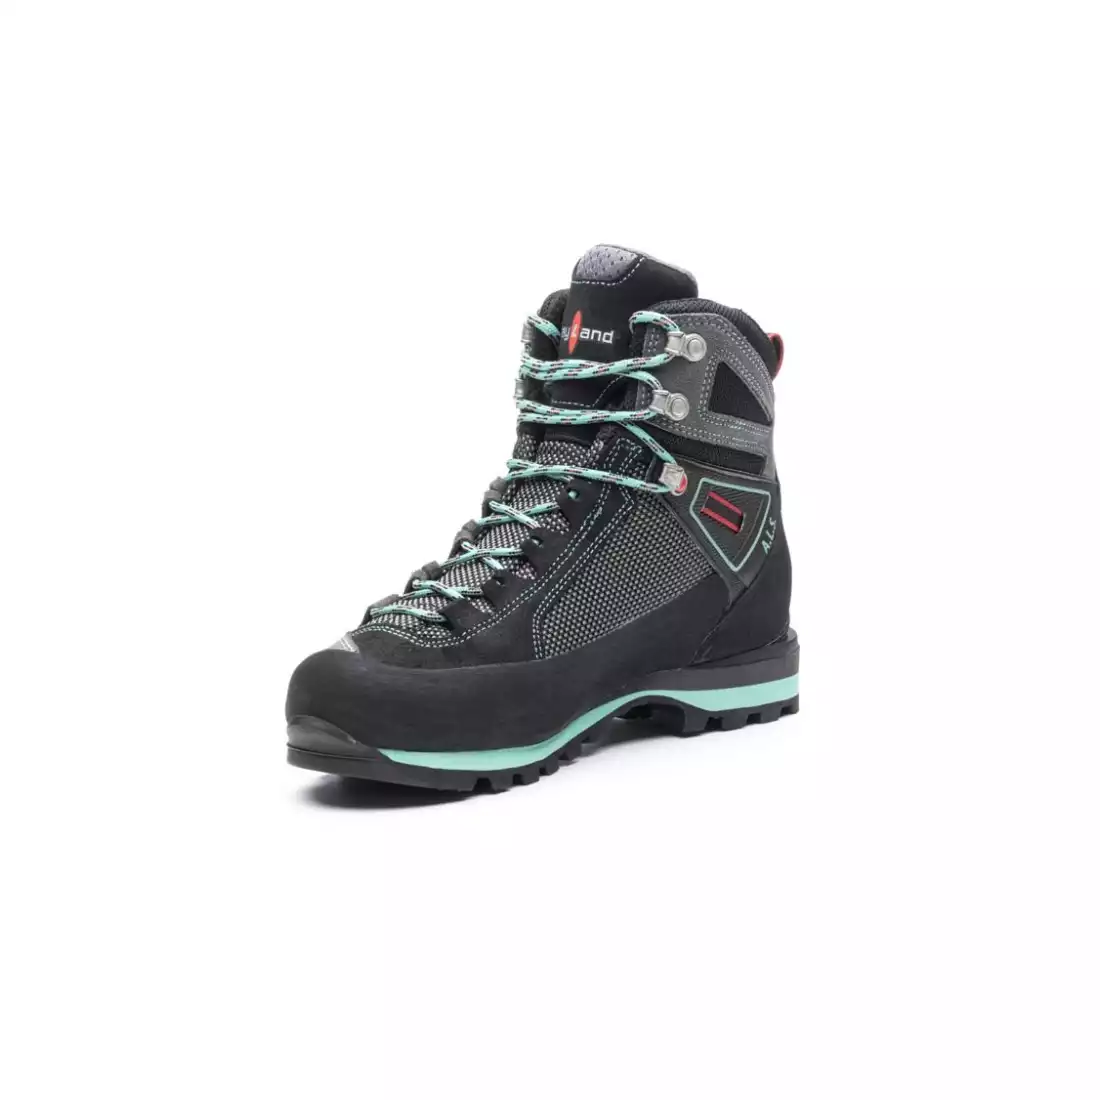 KAYLAND CROSS MOUNTAIN WS GTX Women's trekking shoes, GORE-TEX, VIBRAM, grey blue